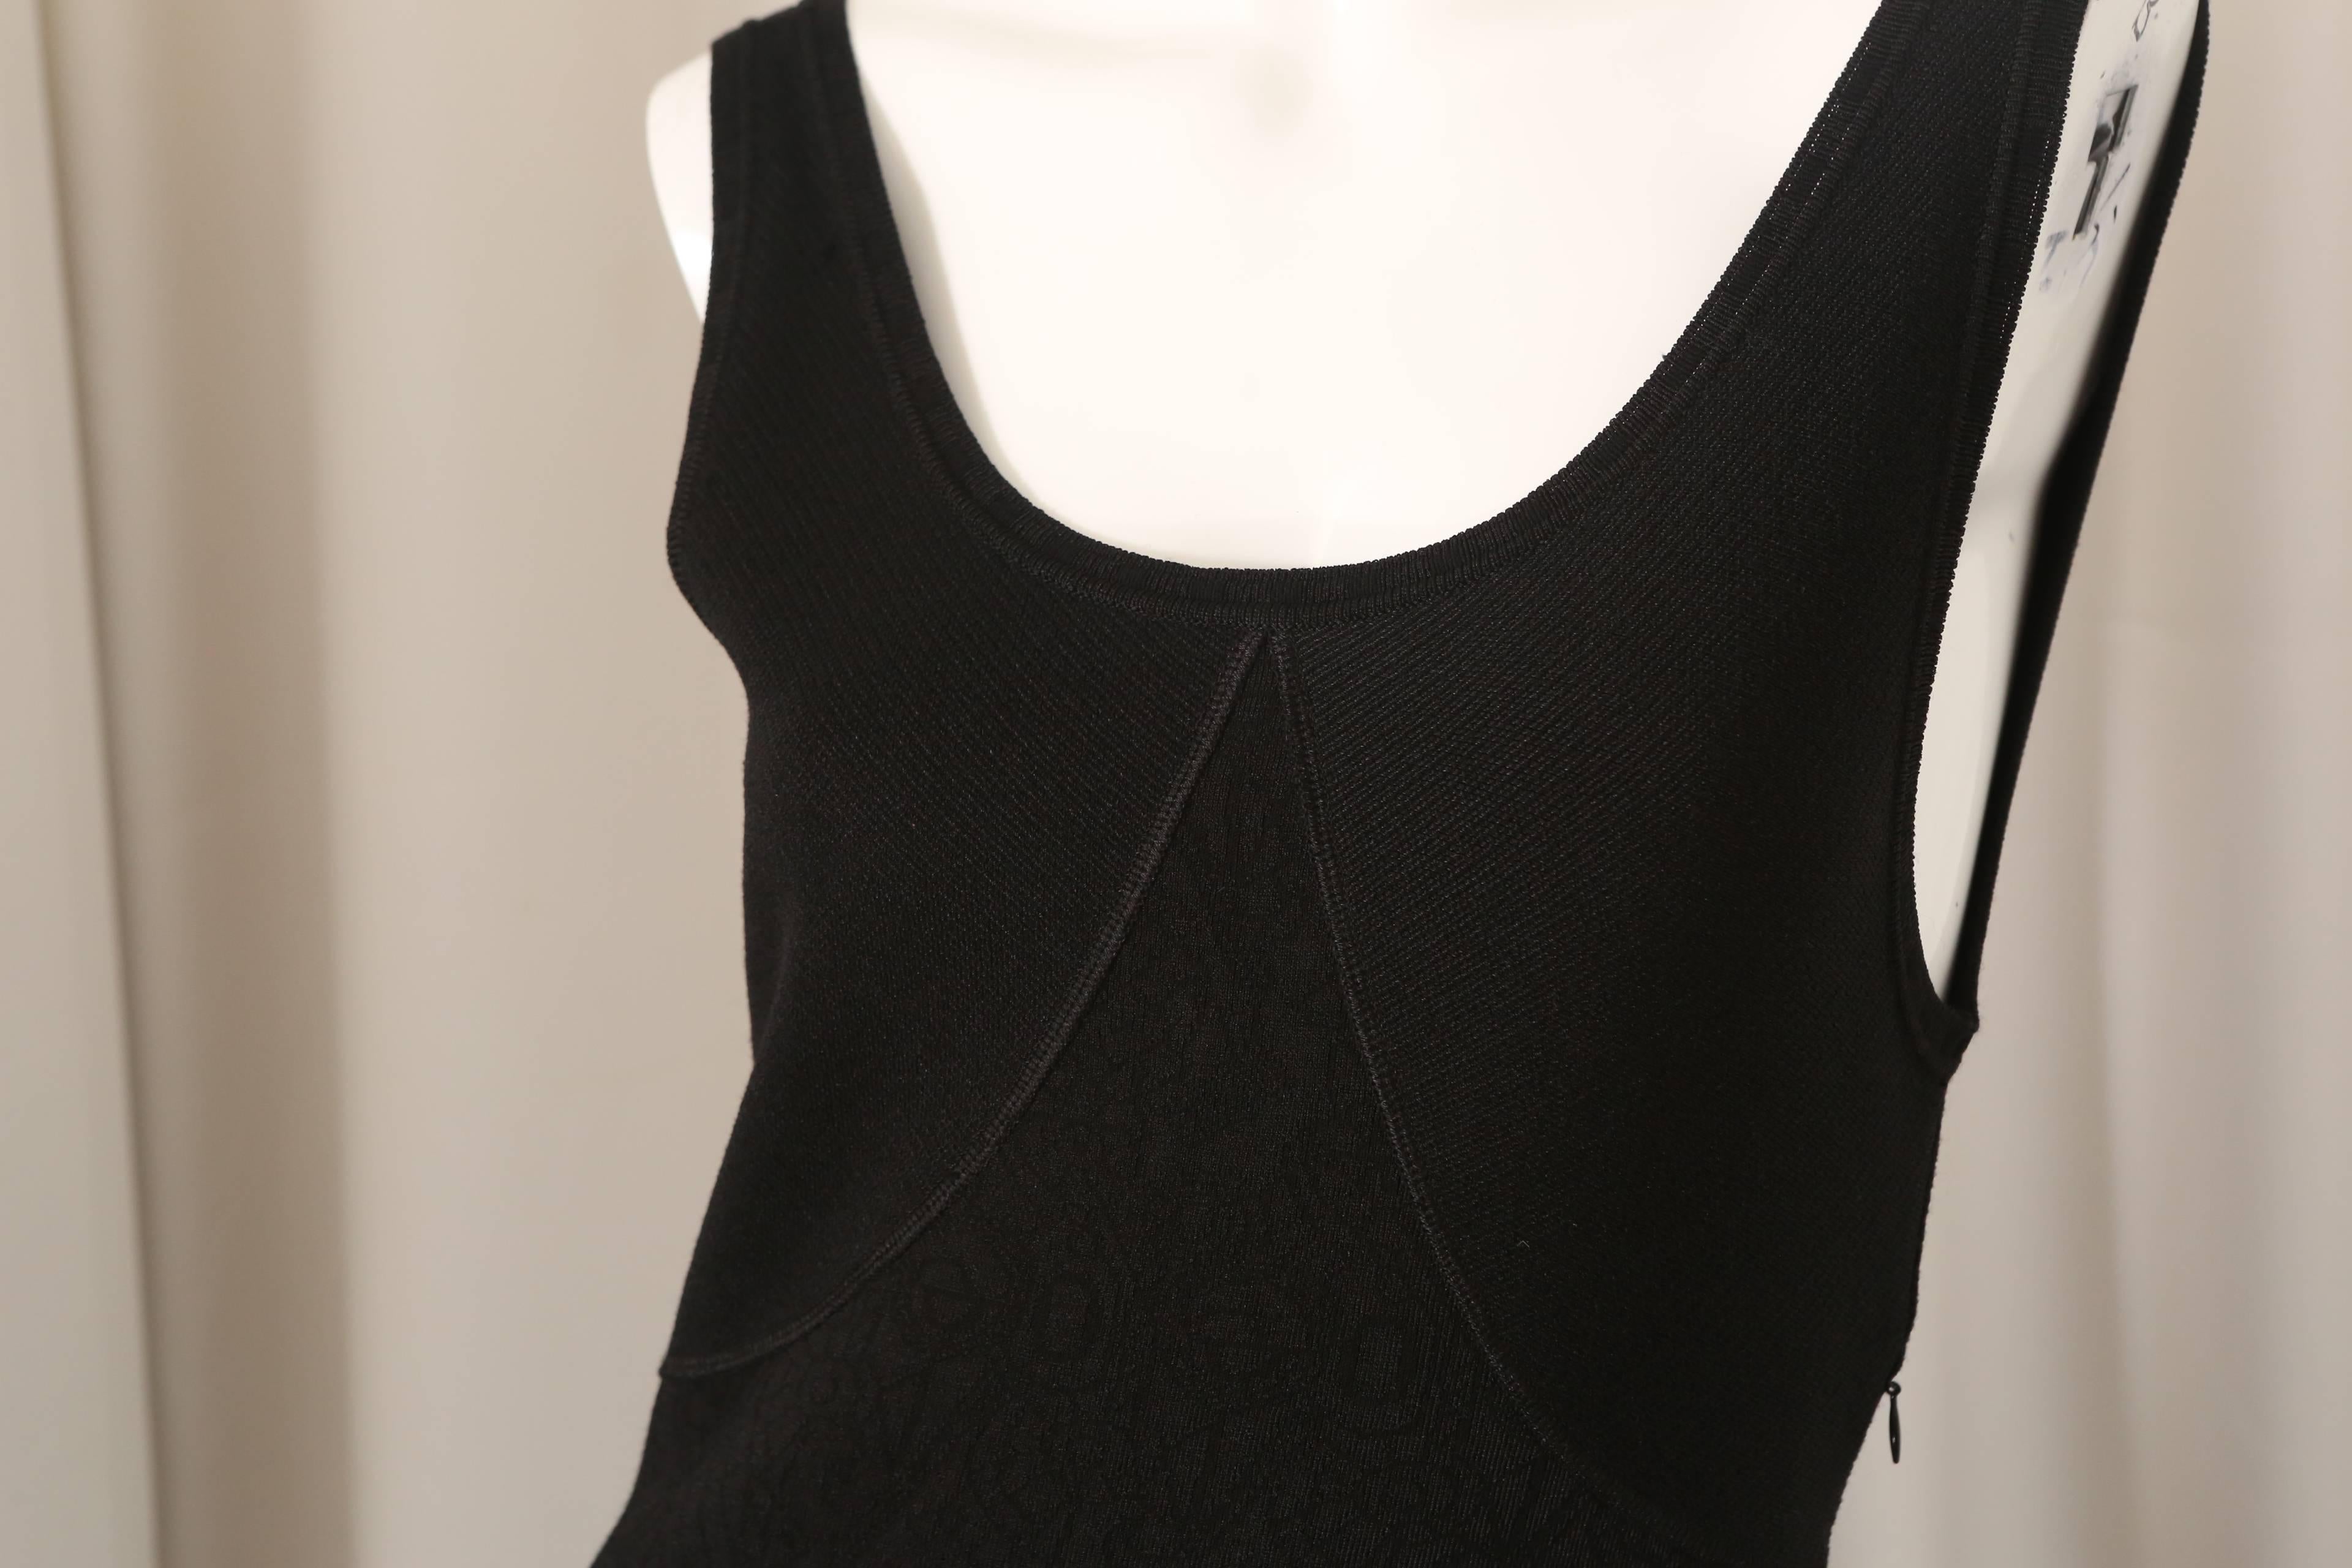 Zac Posen sleeveless black textured dress with flare bottom.